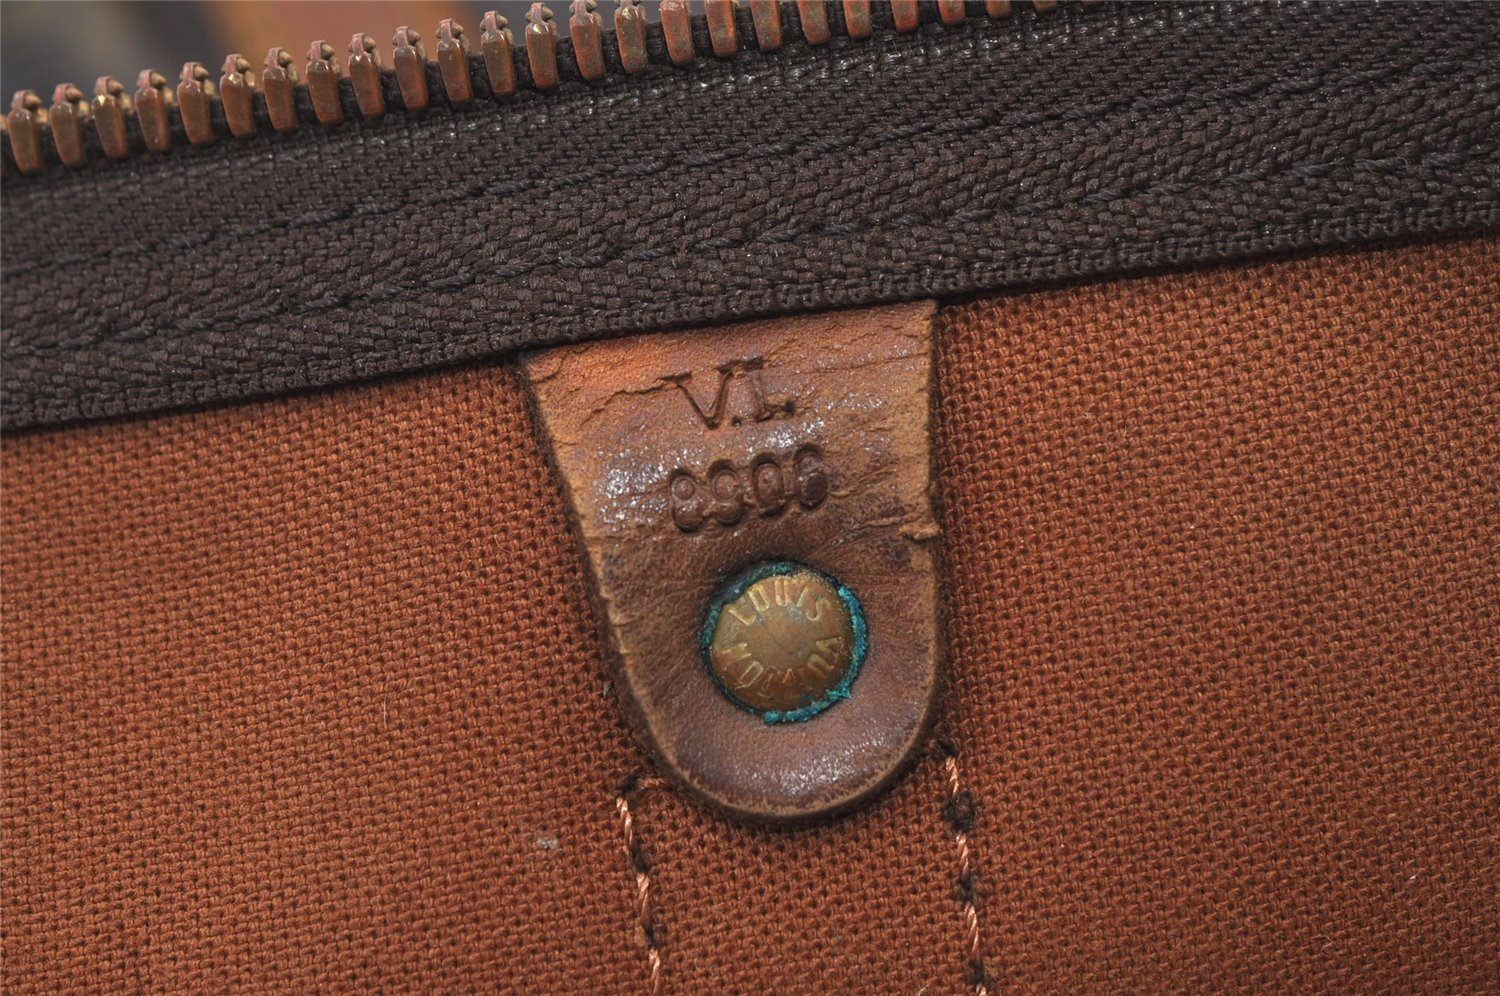 Authentic Louis Vuitton Monogram Keepall 45 Travel Boston Bag M41428 LV 5286J